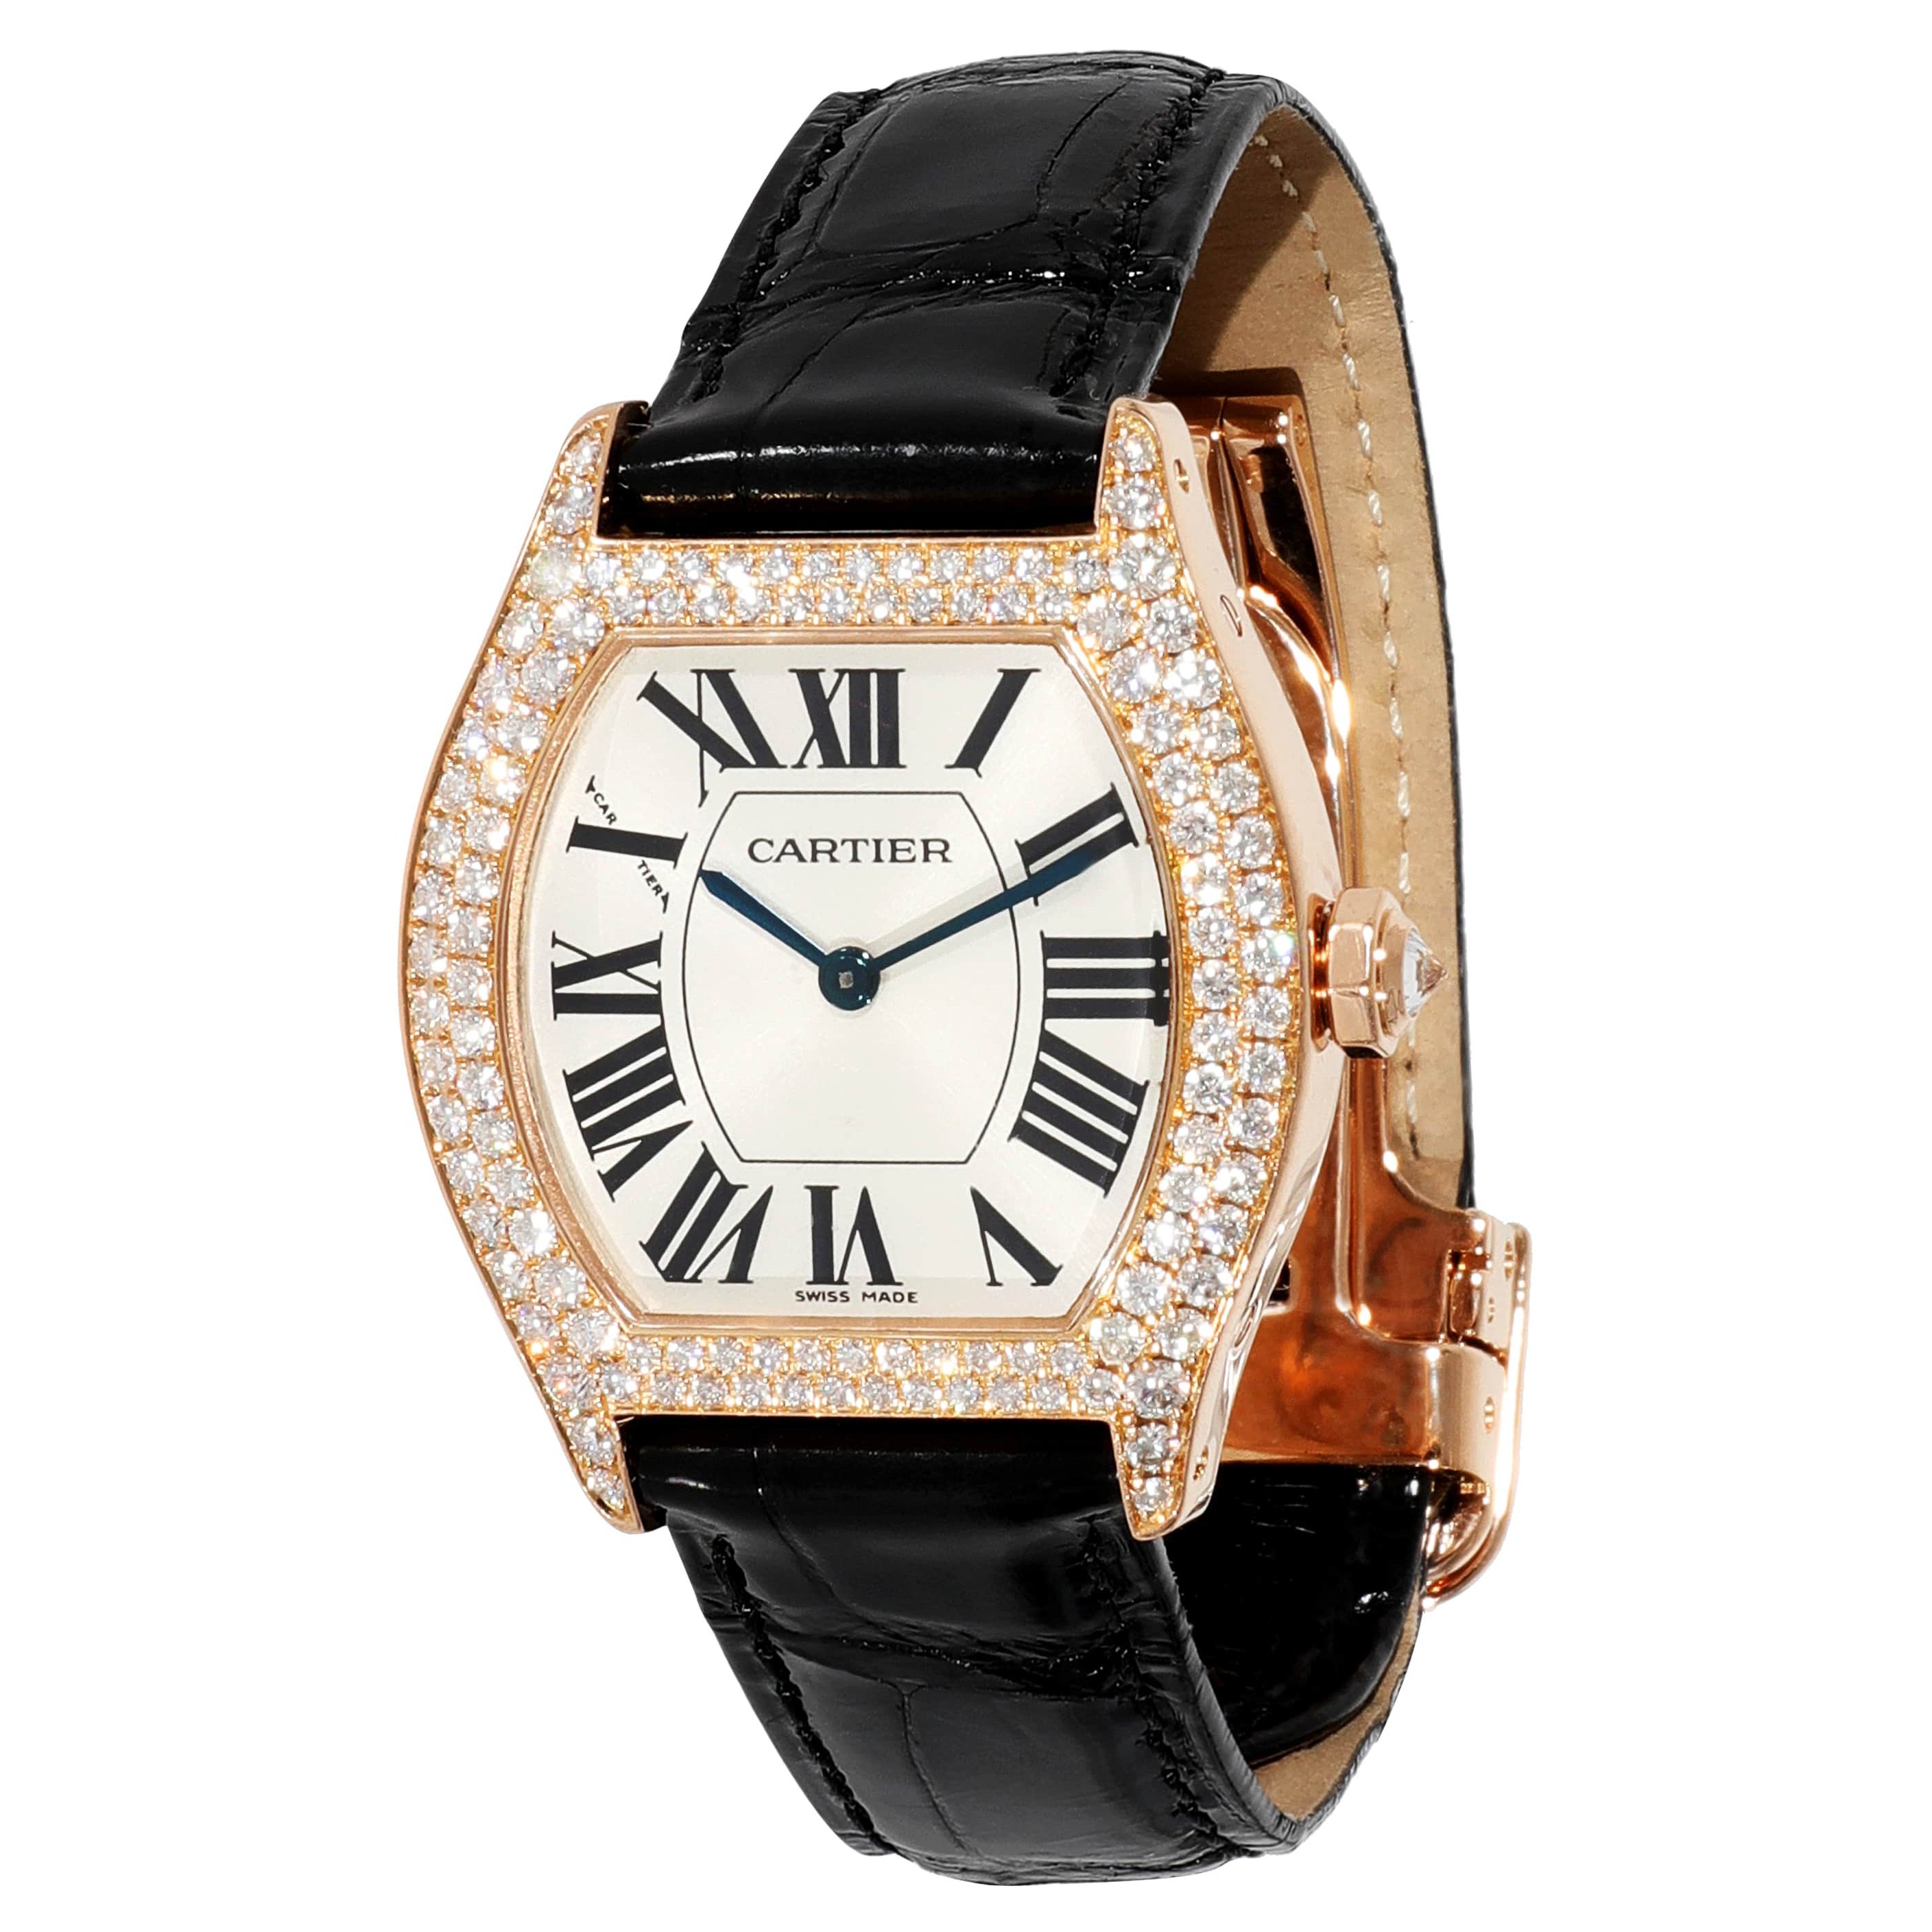 Cartier Tortue WA503751 Women's Watch in 18 Karat Rose Gold